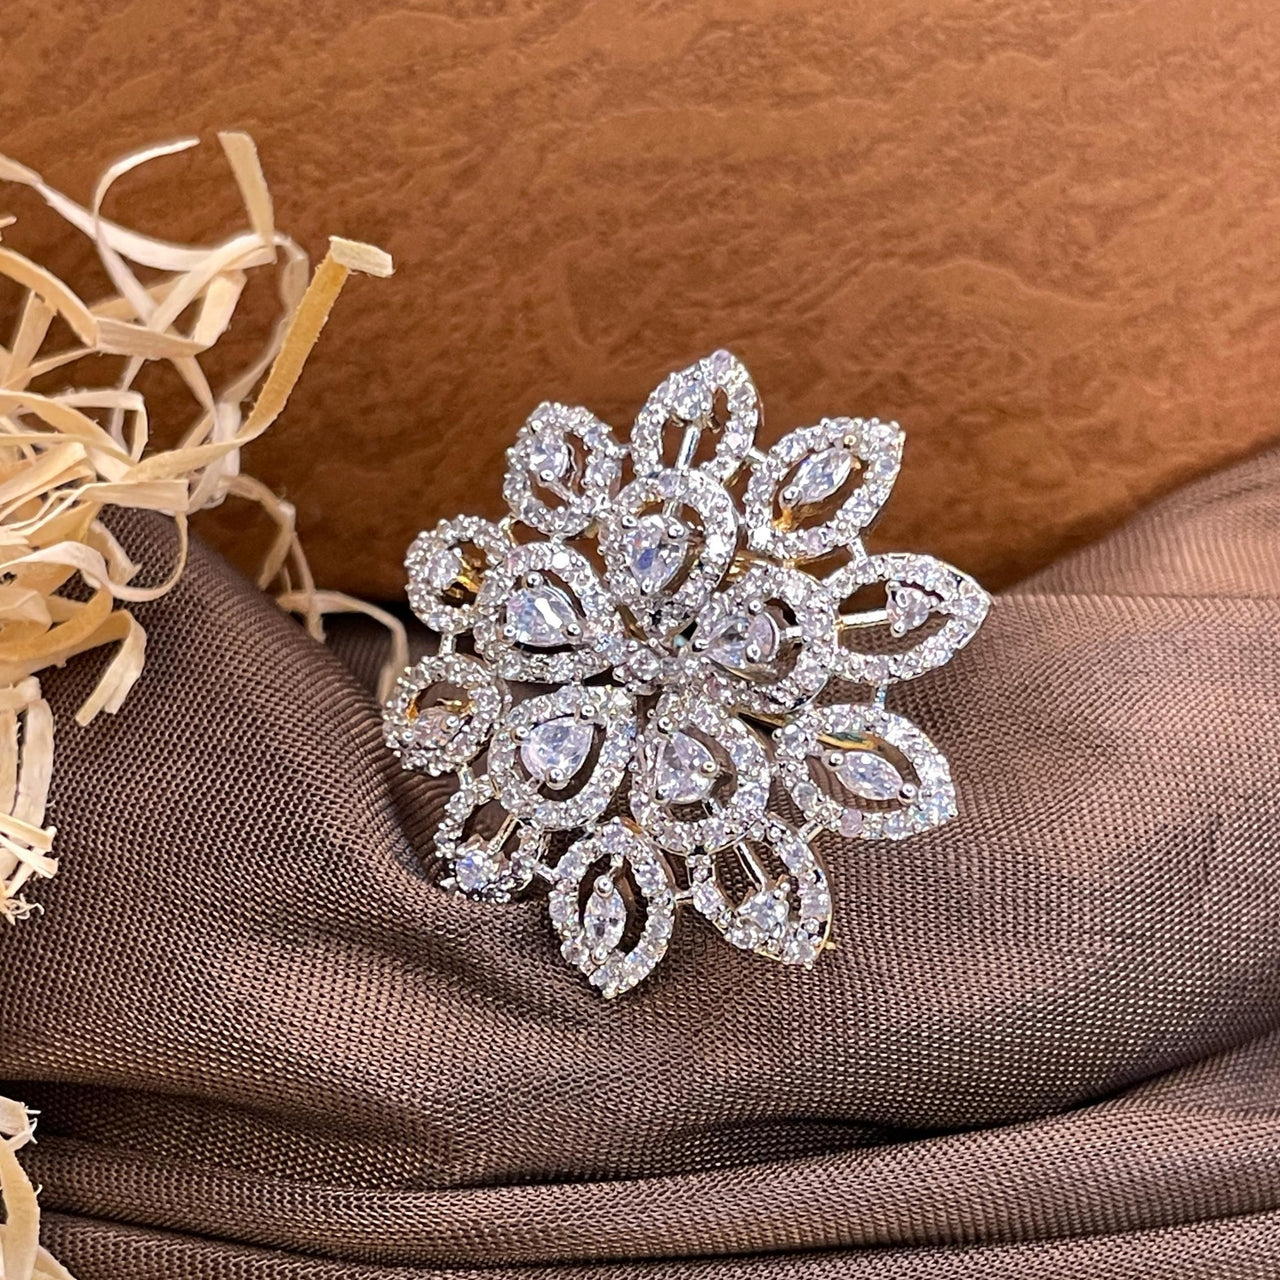 High Quality Oversized Diamond Rings - Abdesignsjewellery